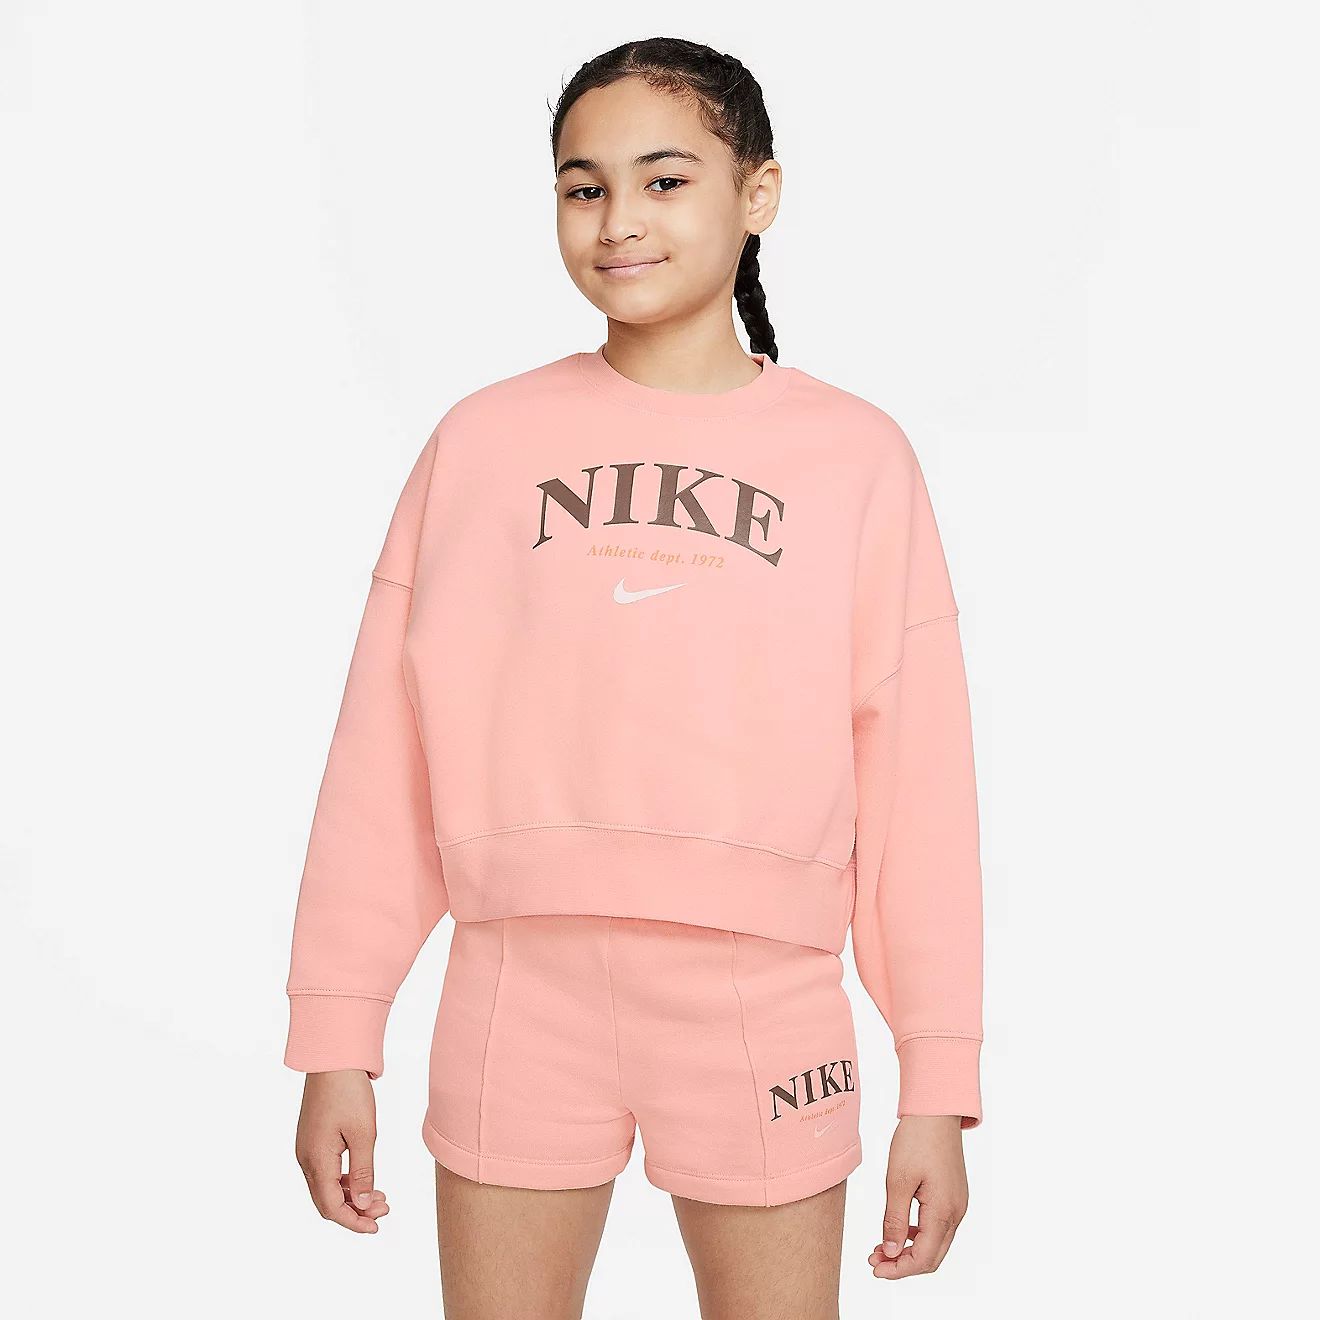 Nike Girls' Sportswear Trend Crew Sweatshirt | Academy Sports + Outdoors